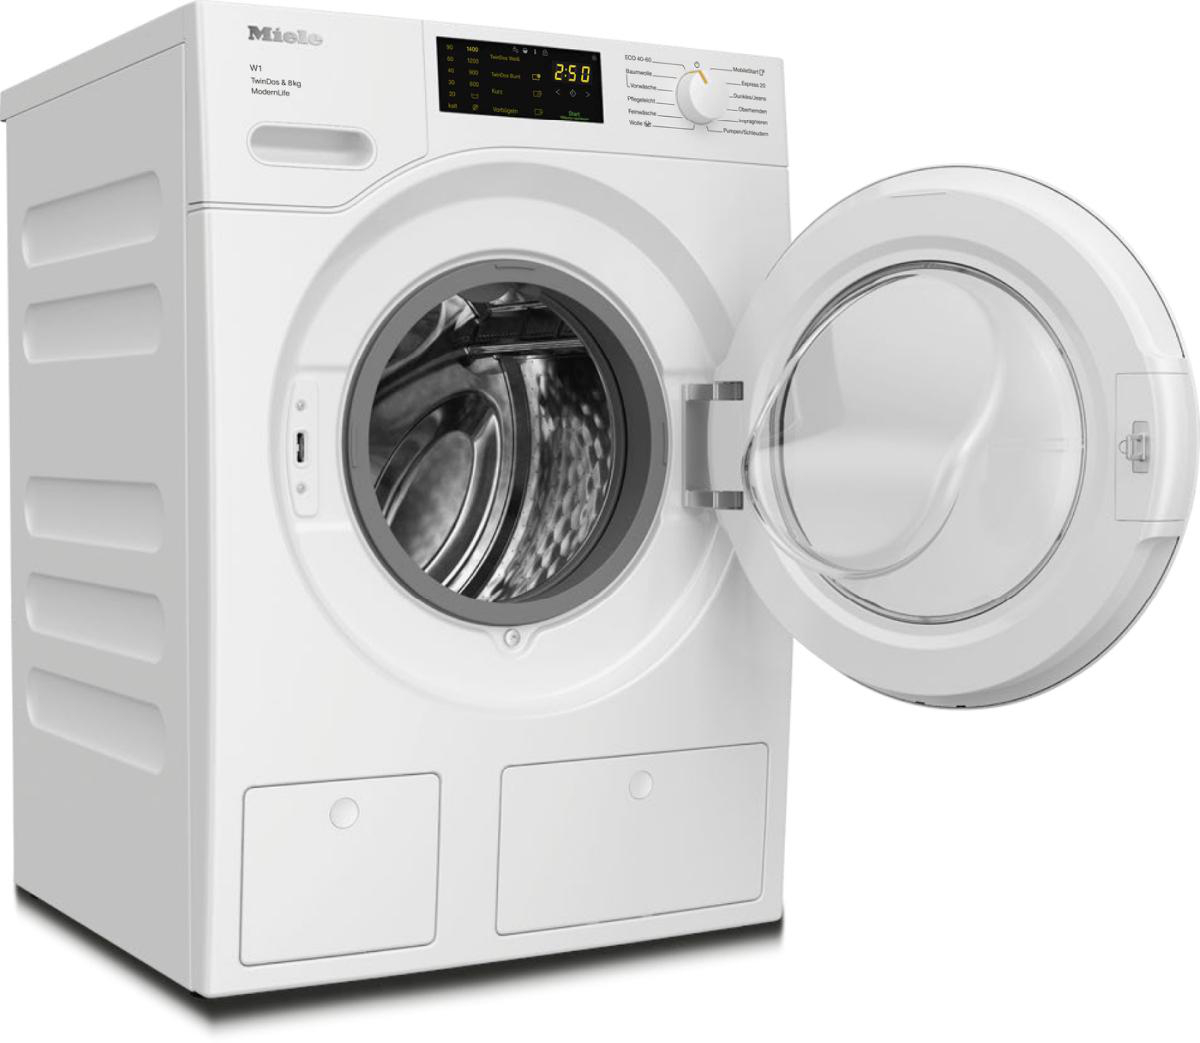 W1 kg, & (8 Flusenfilter WCS A, WWD MIELE Waschmaschine 8kg Edition White 1400 U/Min., 660 Fremdkörperfilter) TDos